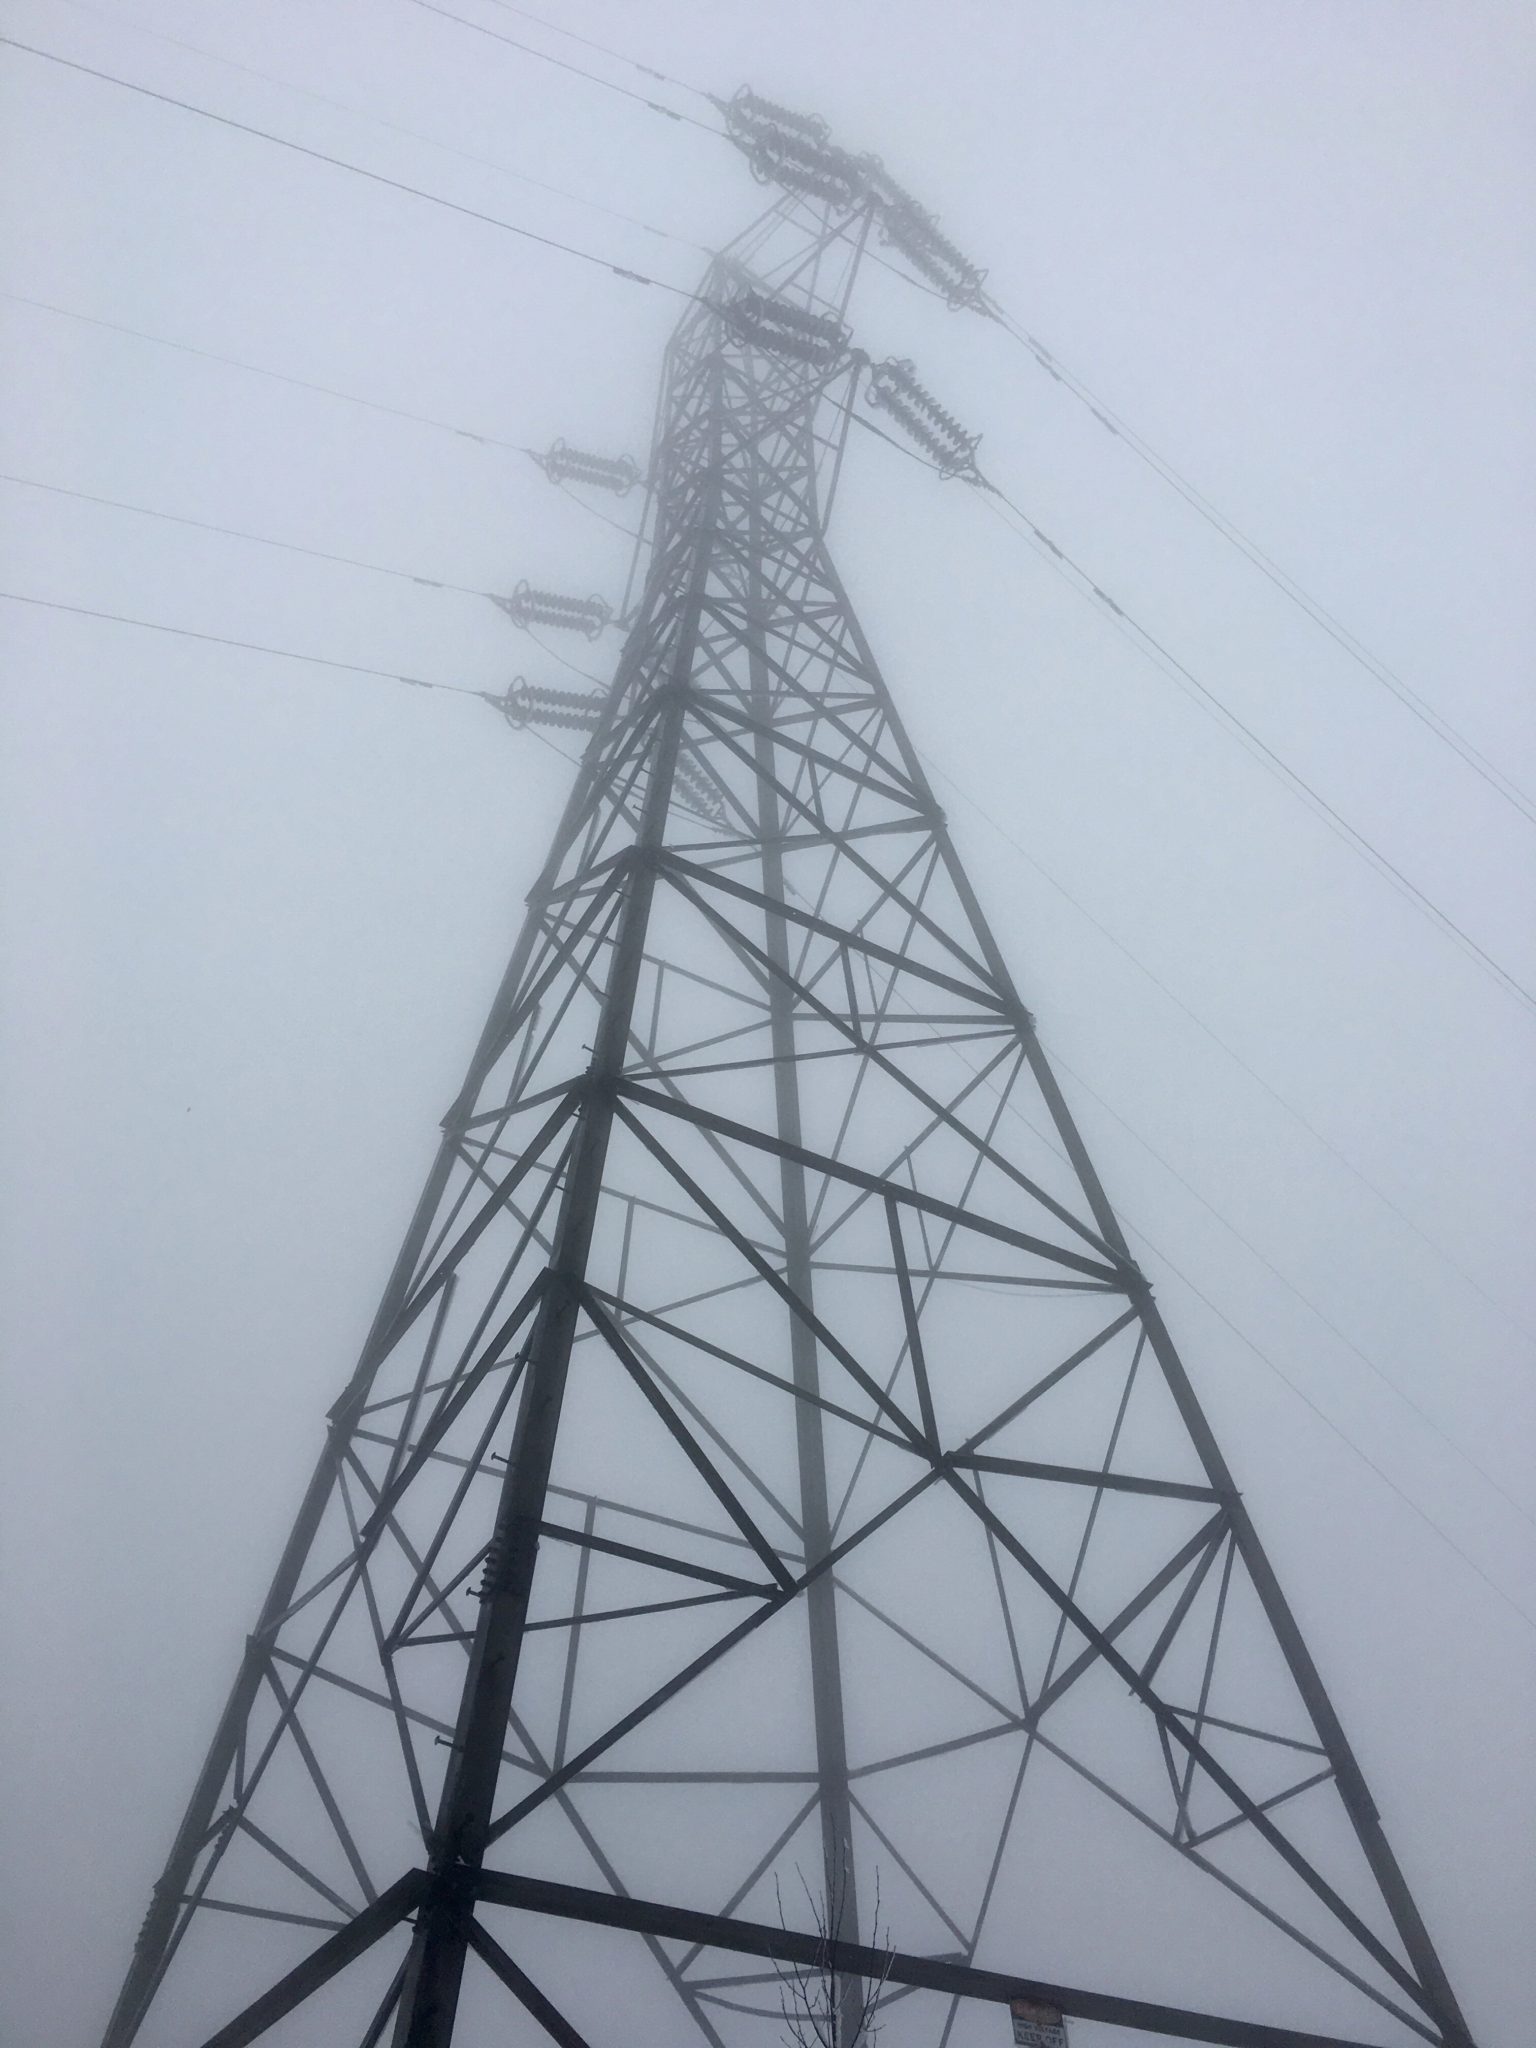 Power courses through the fog